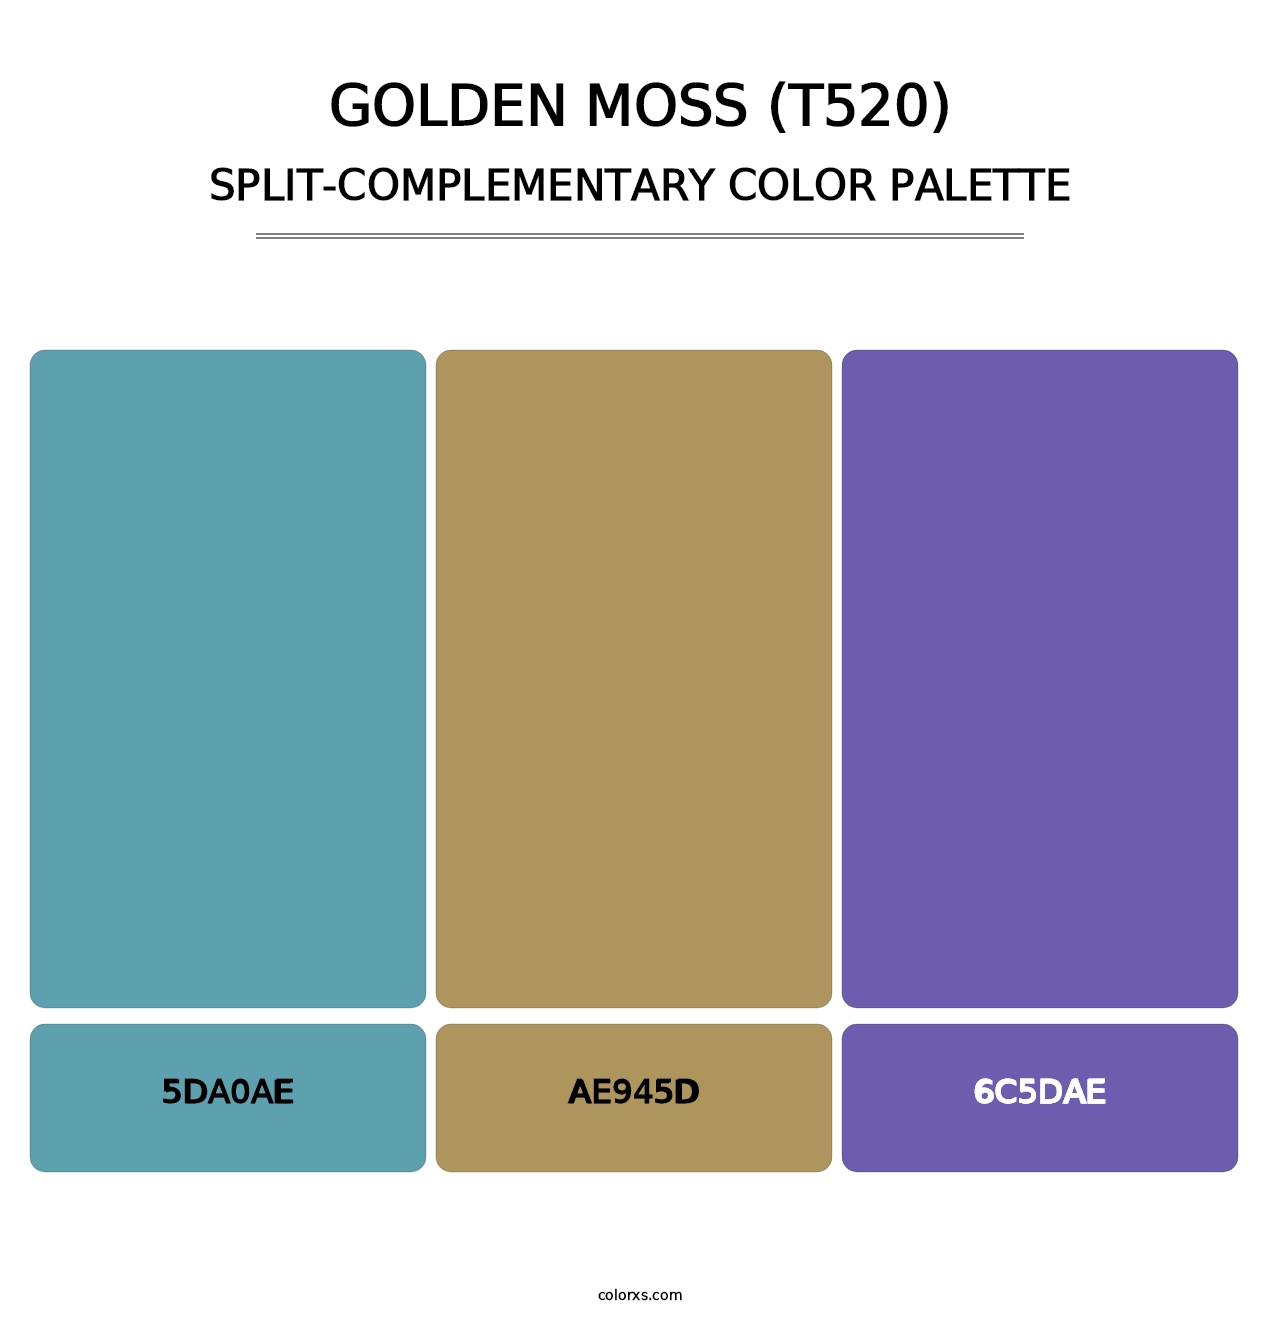 Golden Moss (T520) - Split-Complementary Color Palette